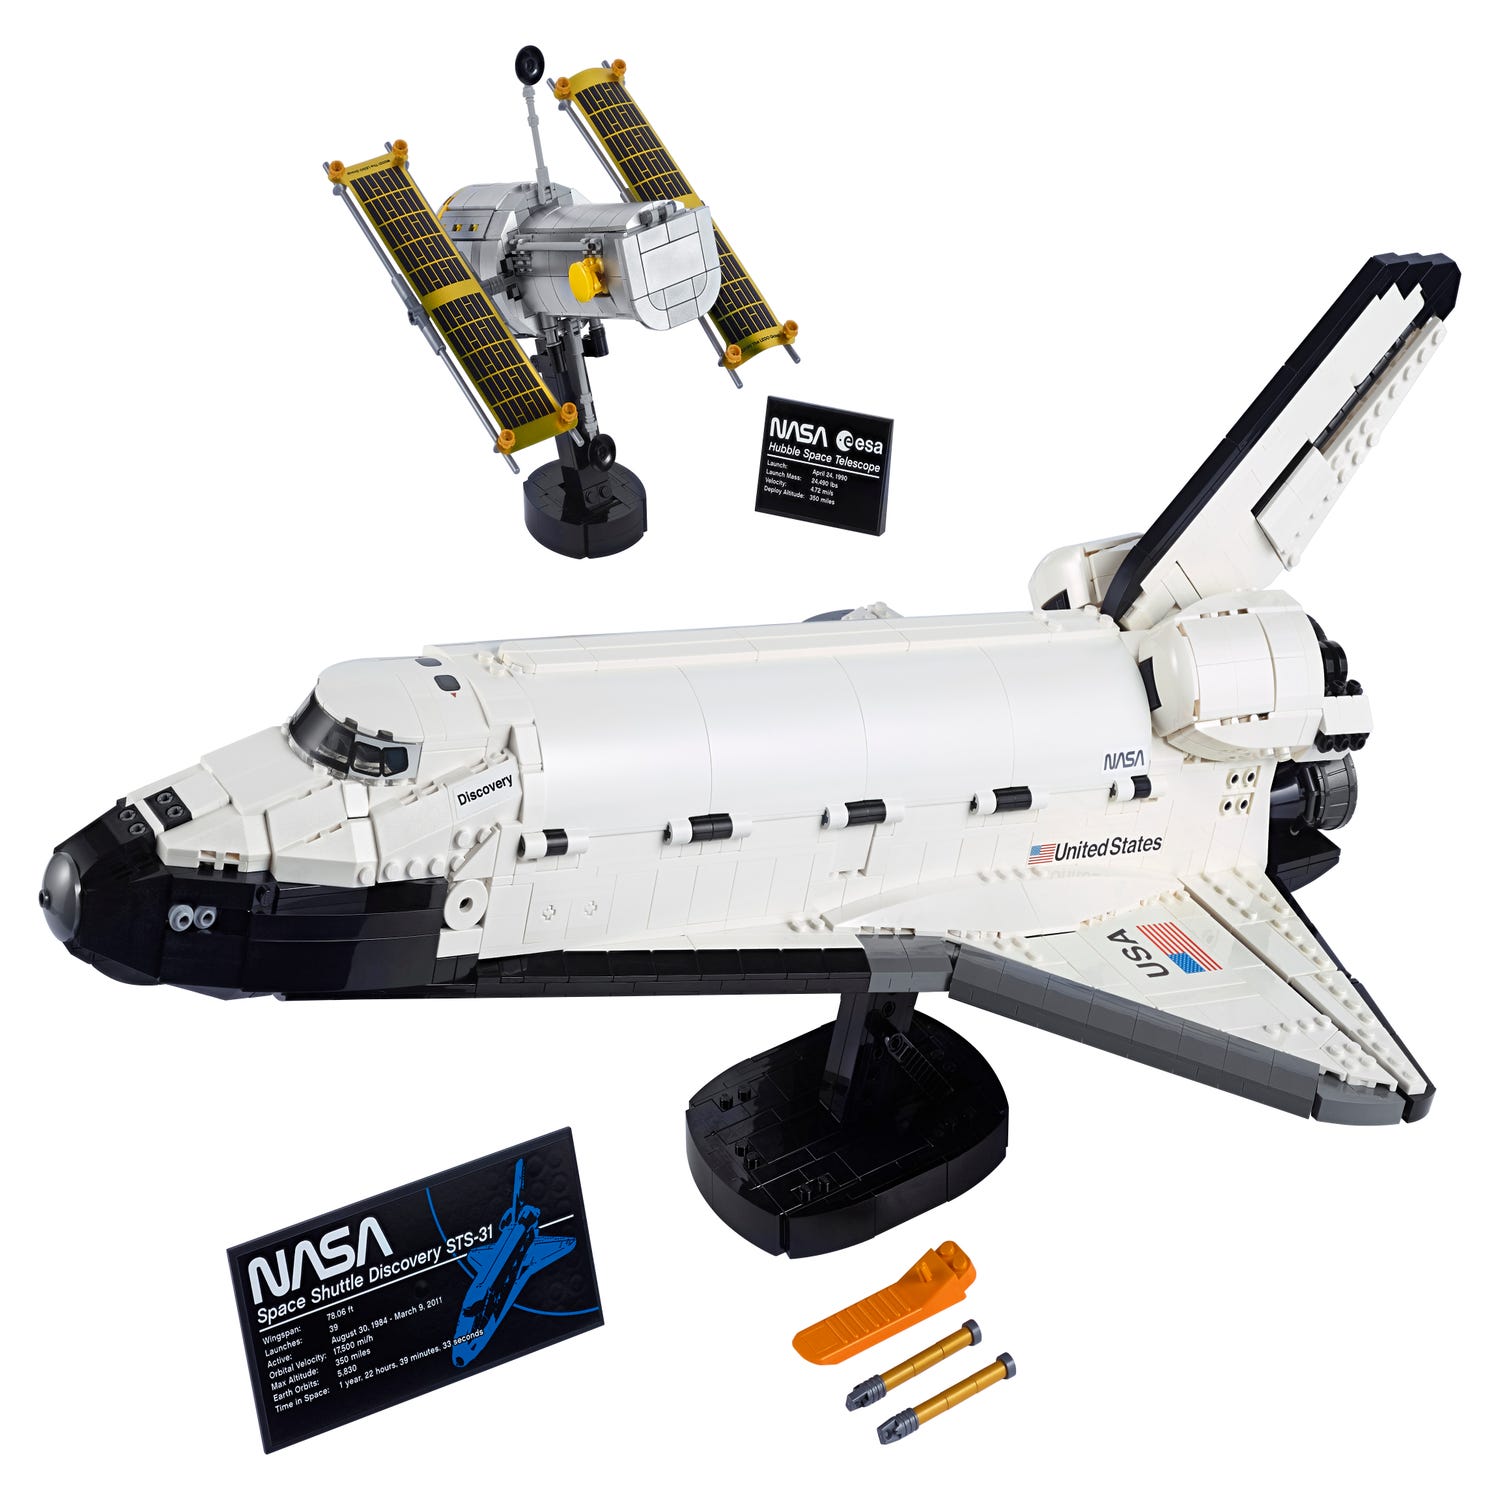 New LEGO: LEGO NASA Space Shuttle Discovery Set